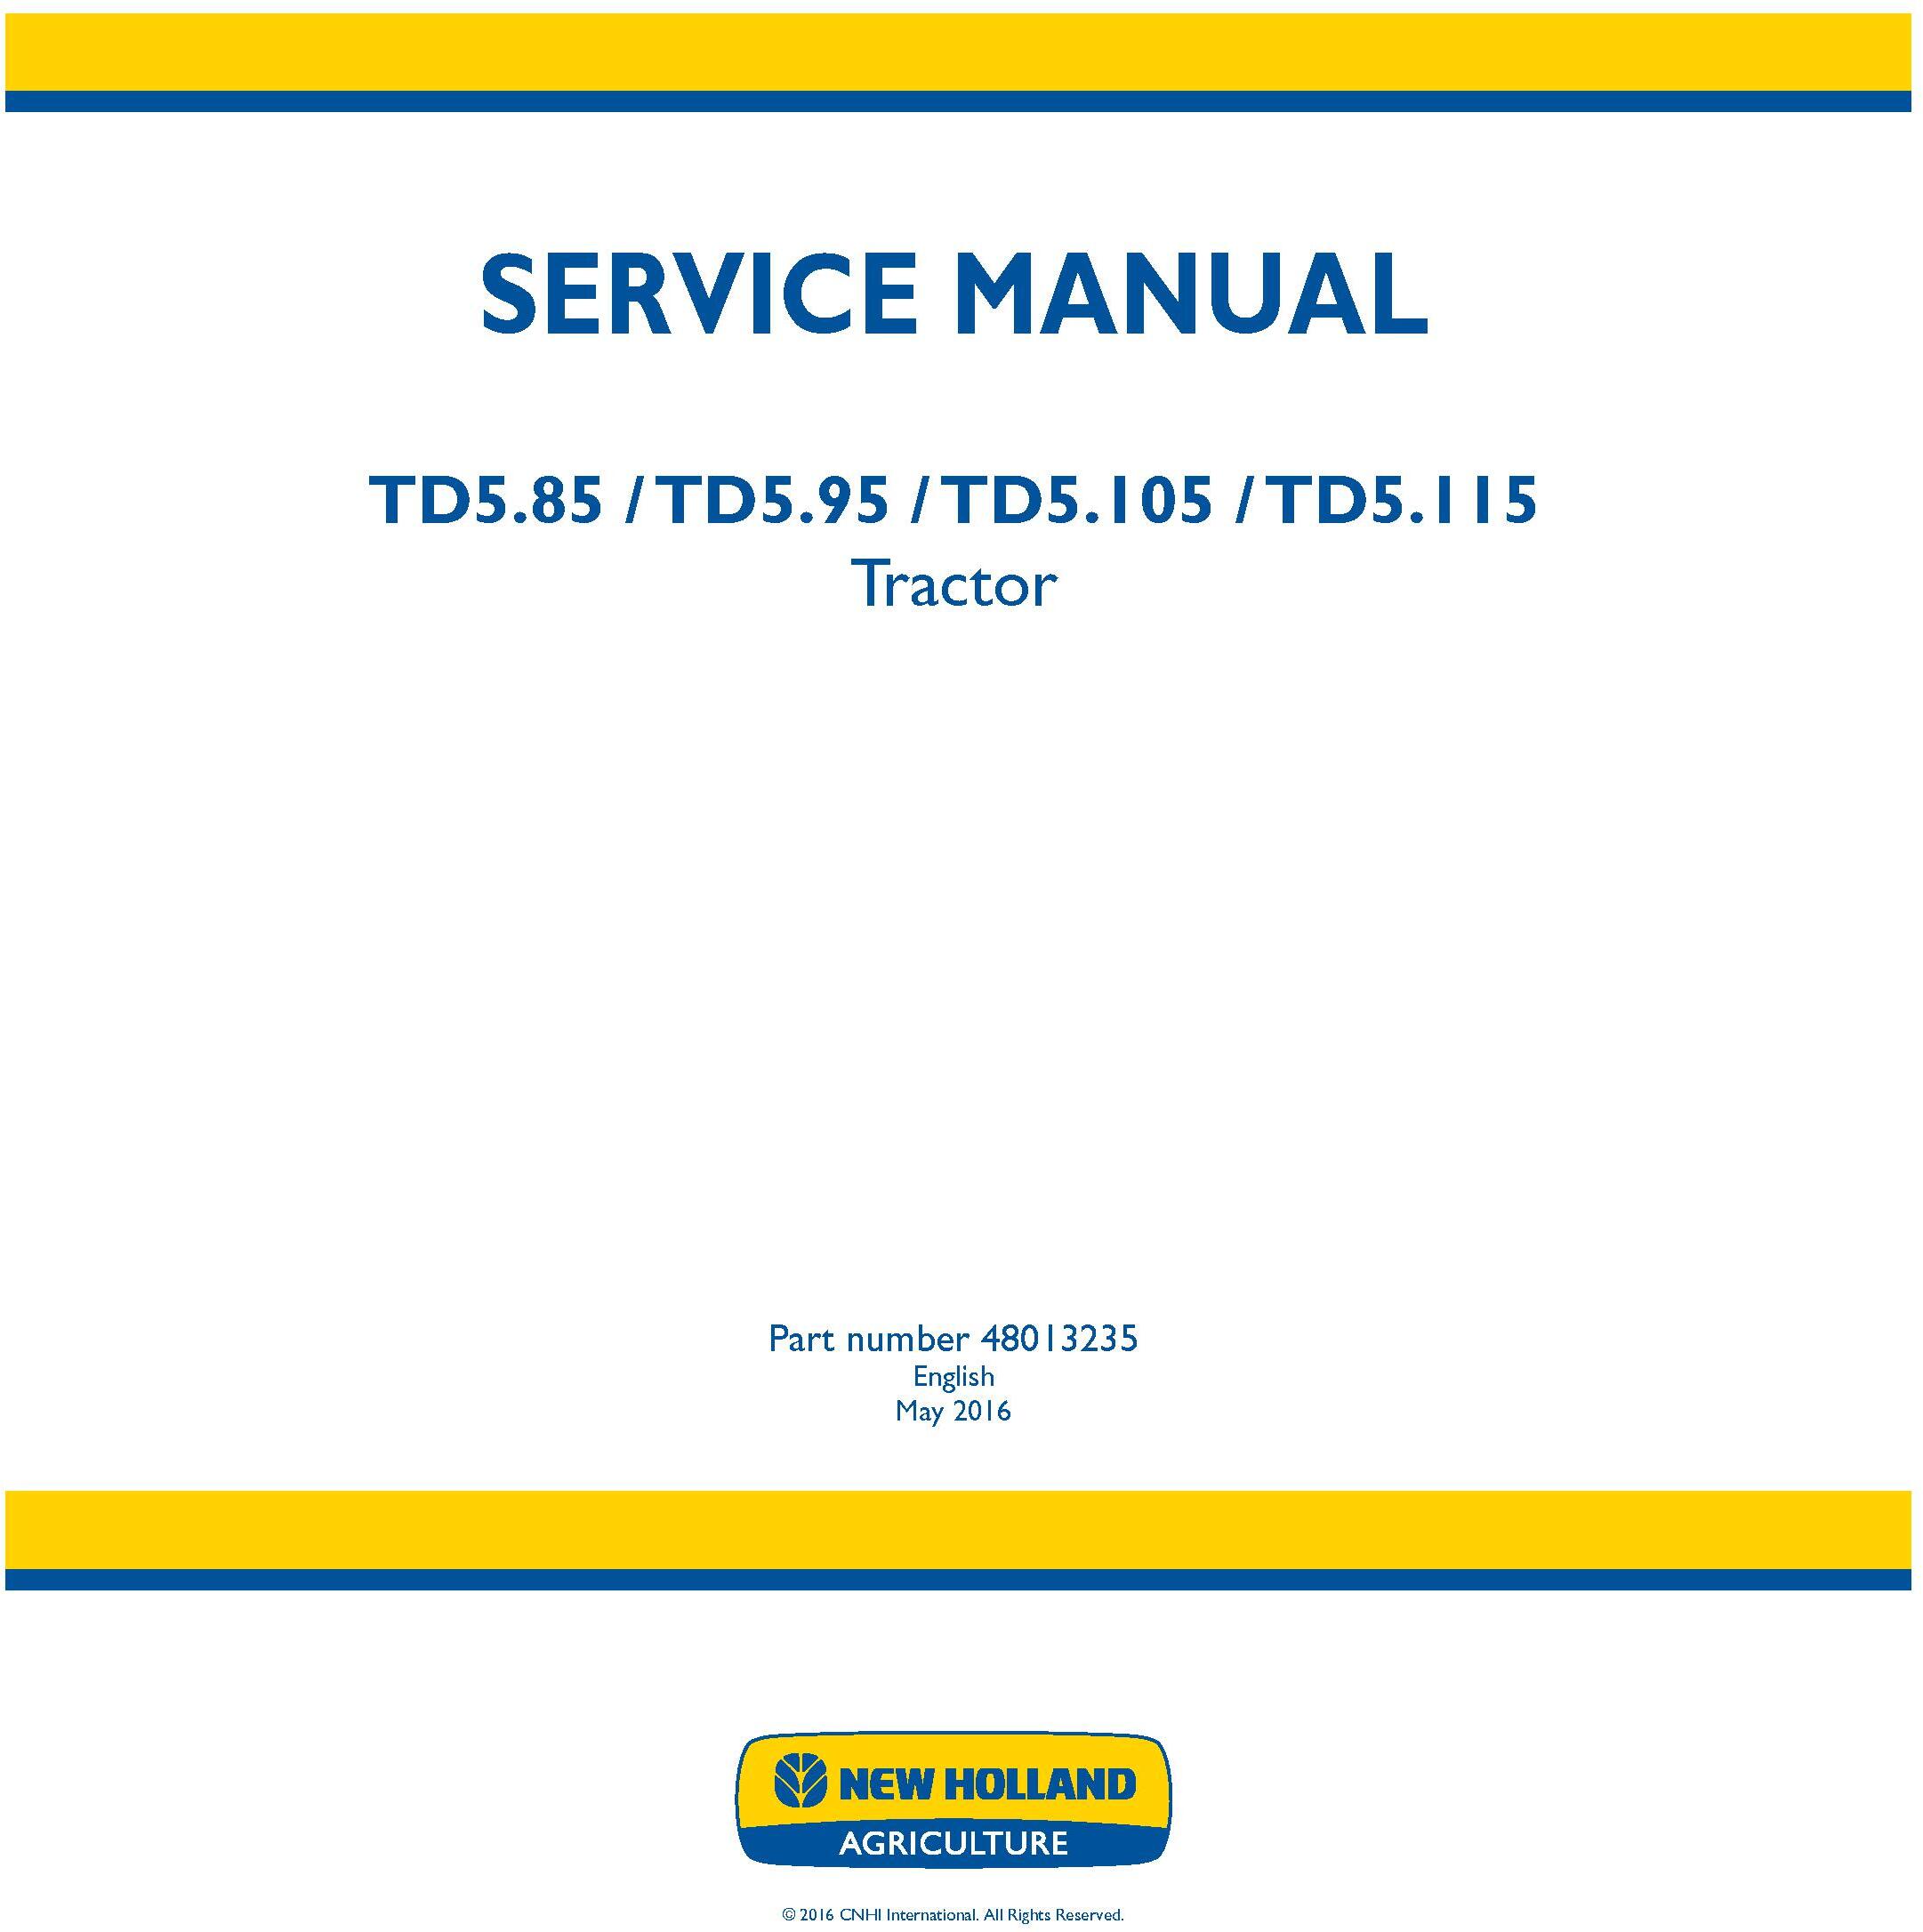 New Holland TD5.85, TD5.95, TD5.105, TD5.115 Tractor Service Manual - 19479